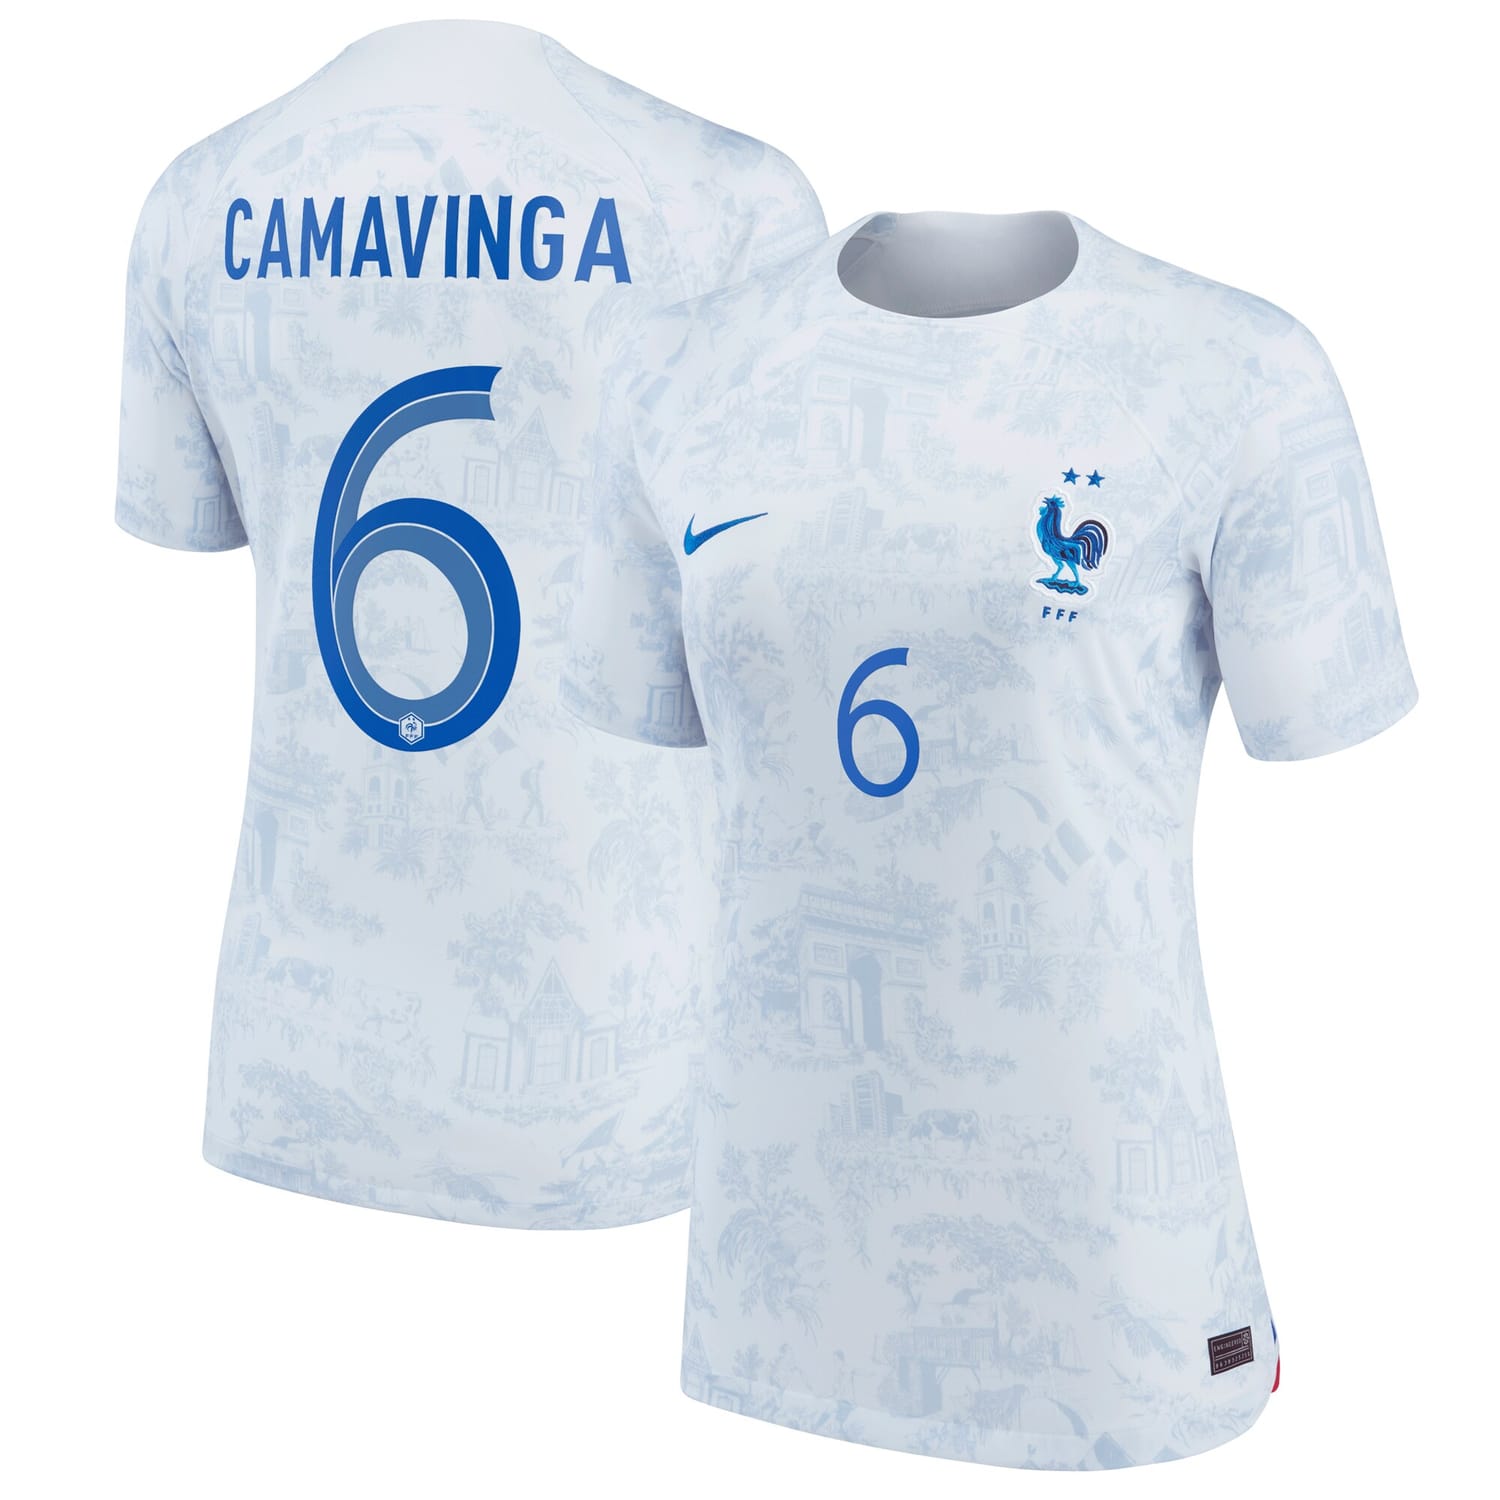 France National Team Away Jersey Shirt 2022 player Eduardo Camavinga 6 printing for Women